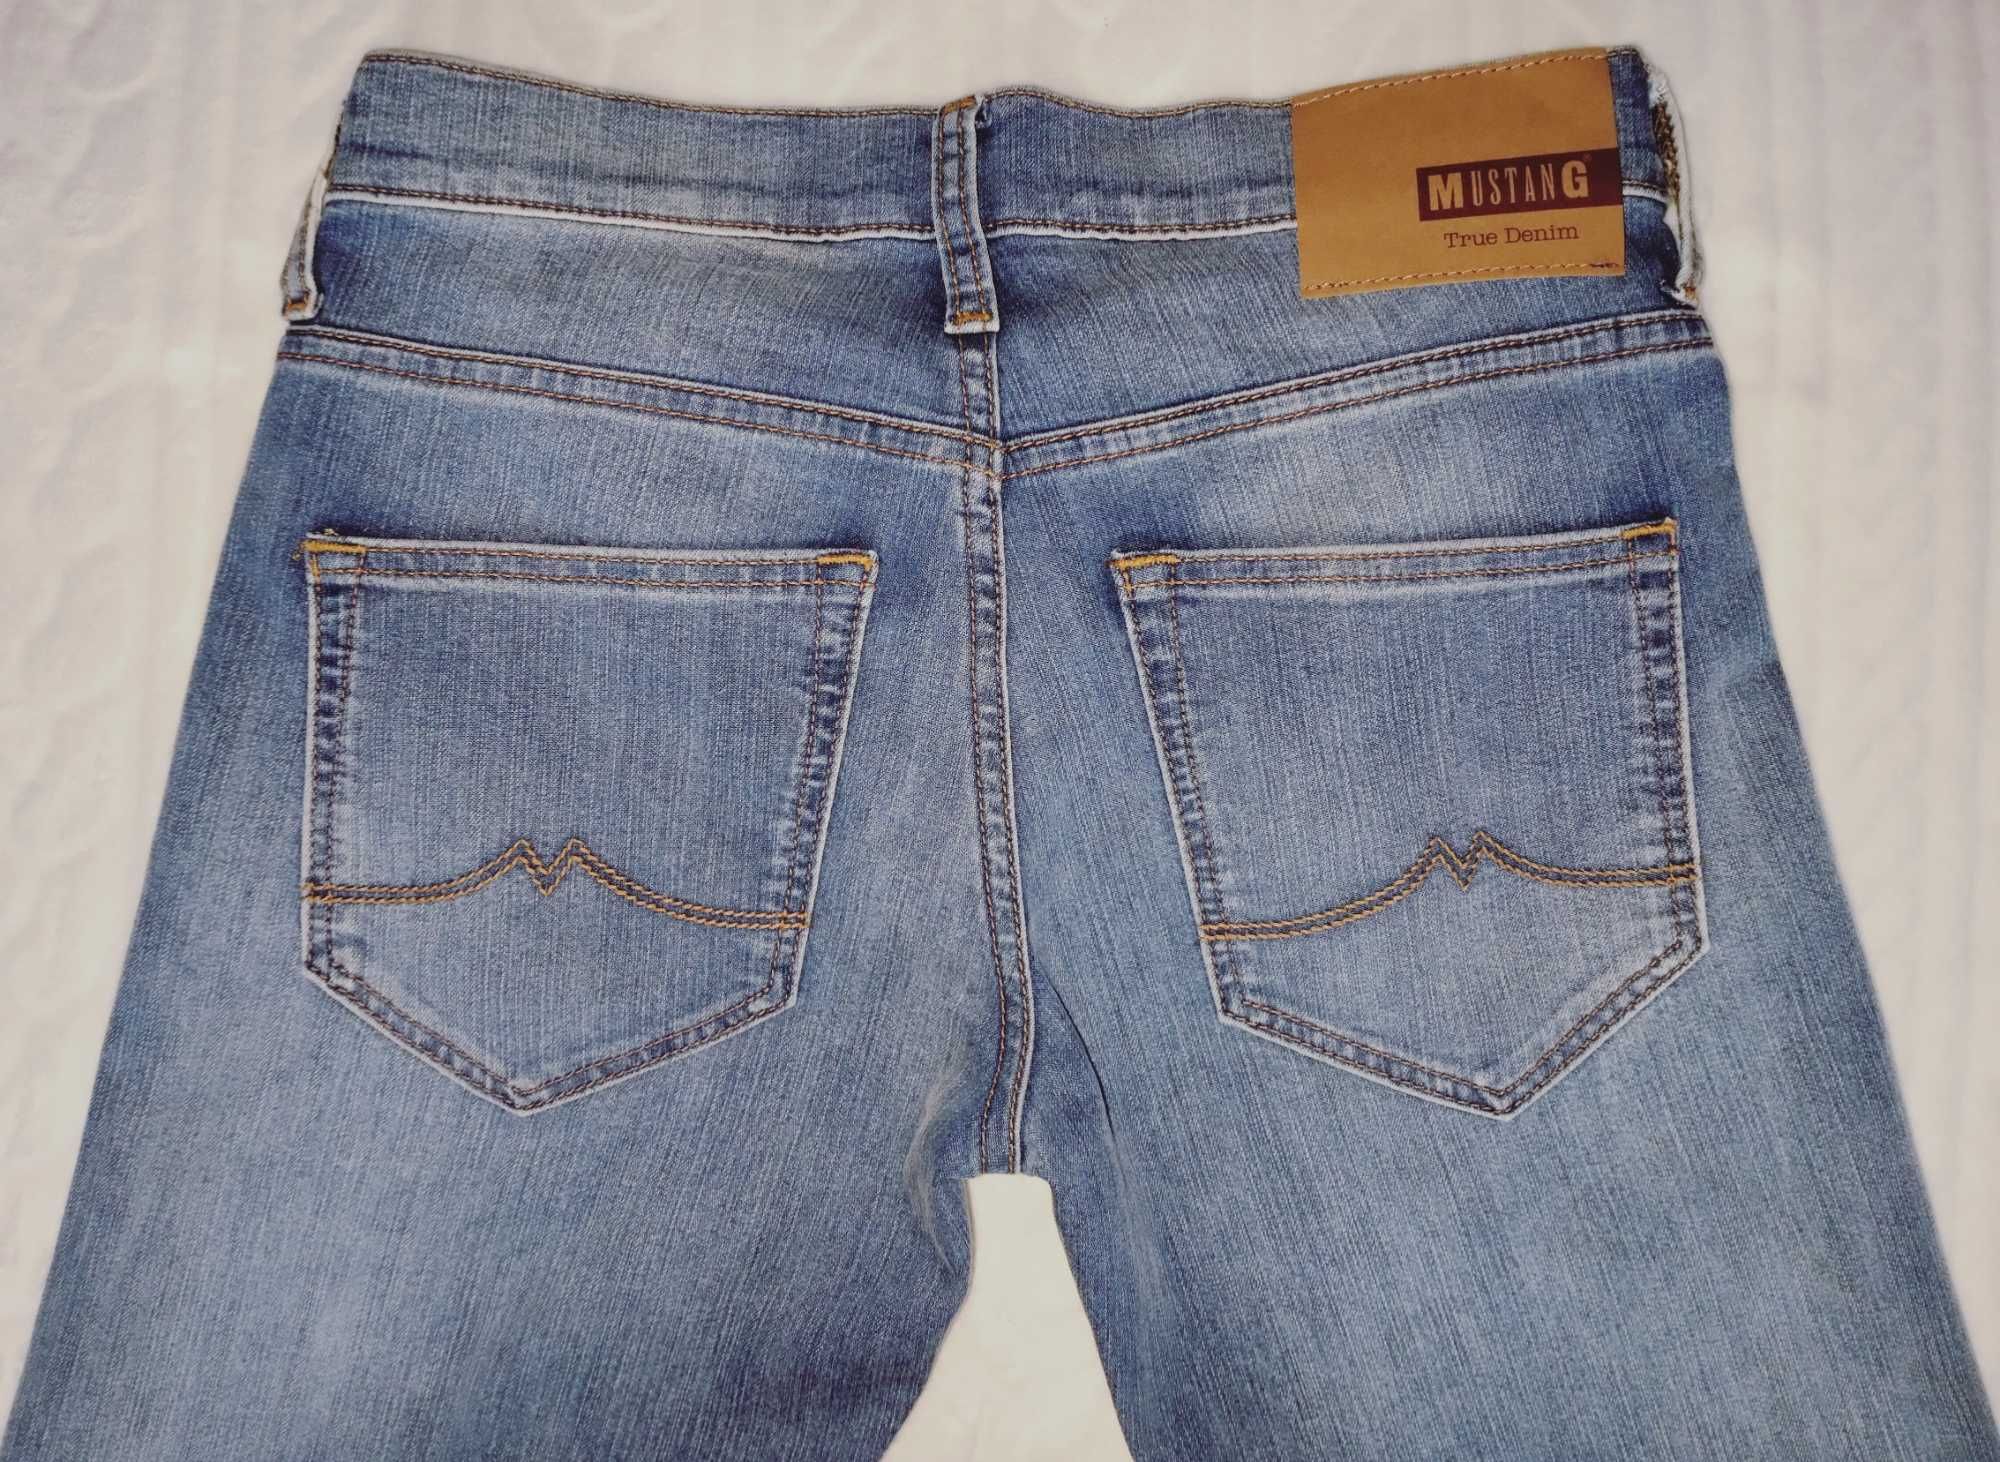 MUSTANG spodnie jeans NOWE 28/32 piękne jasny jeans